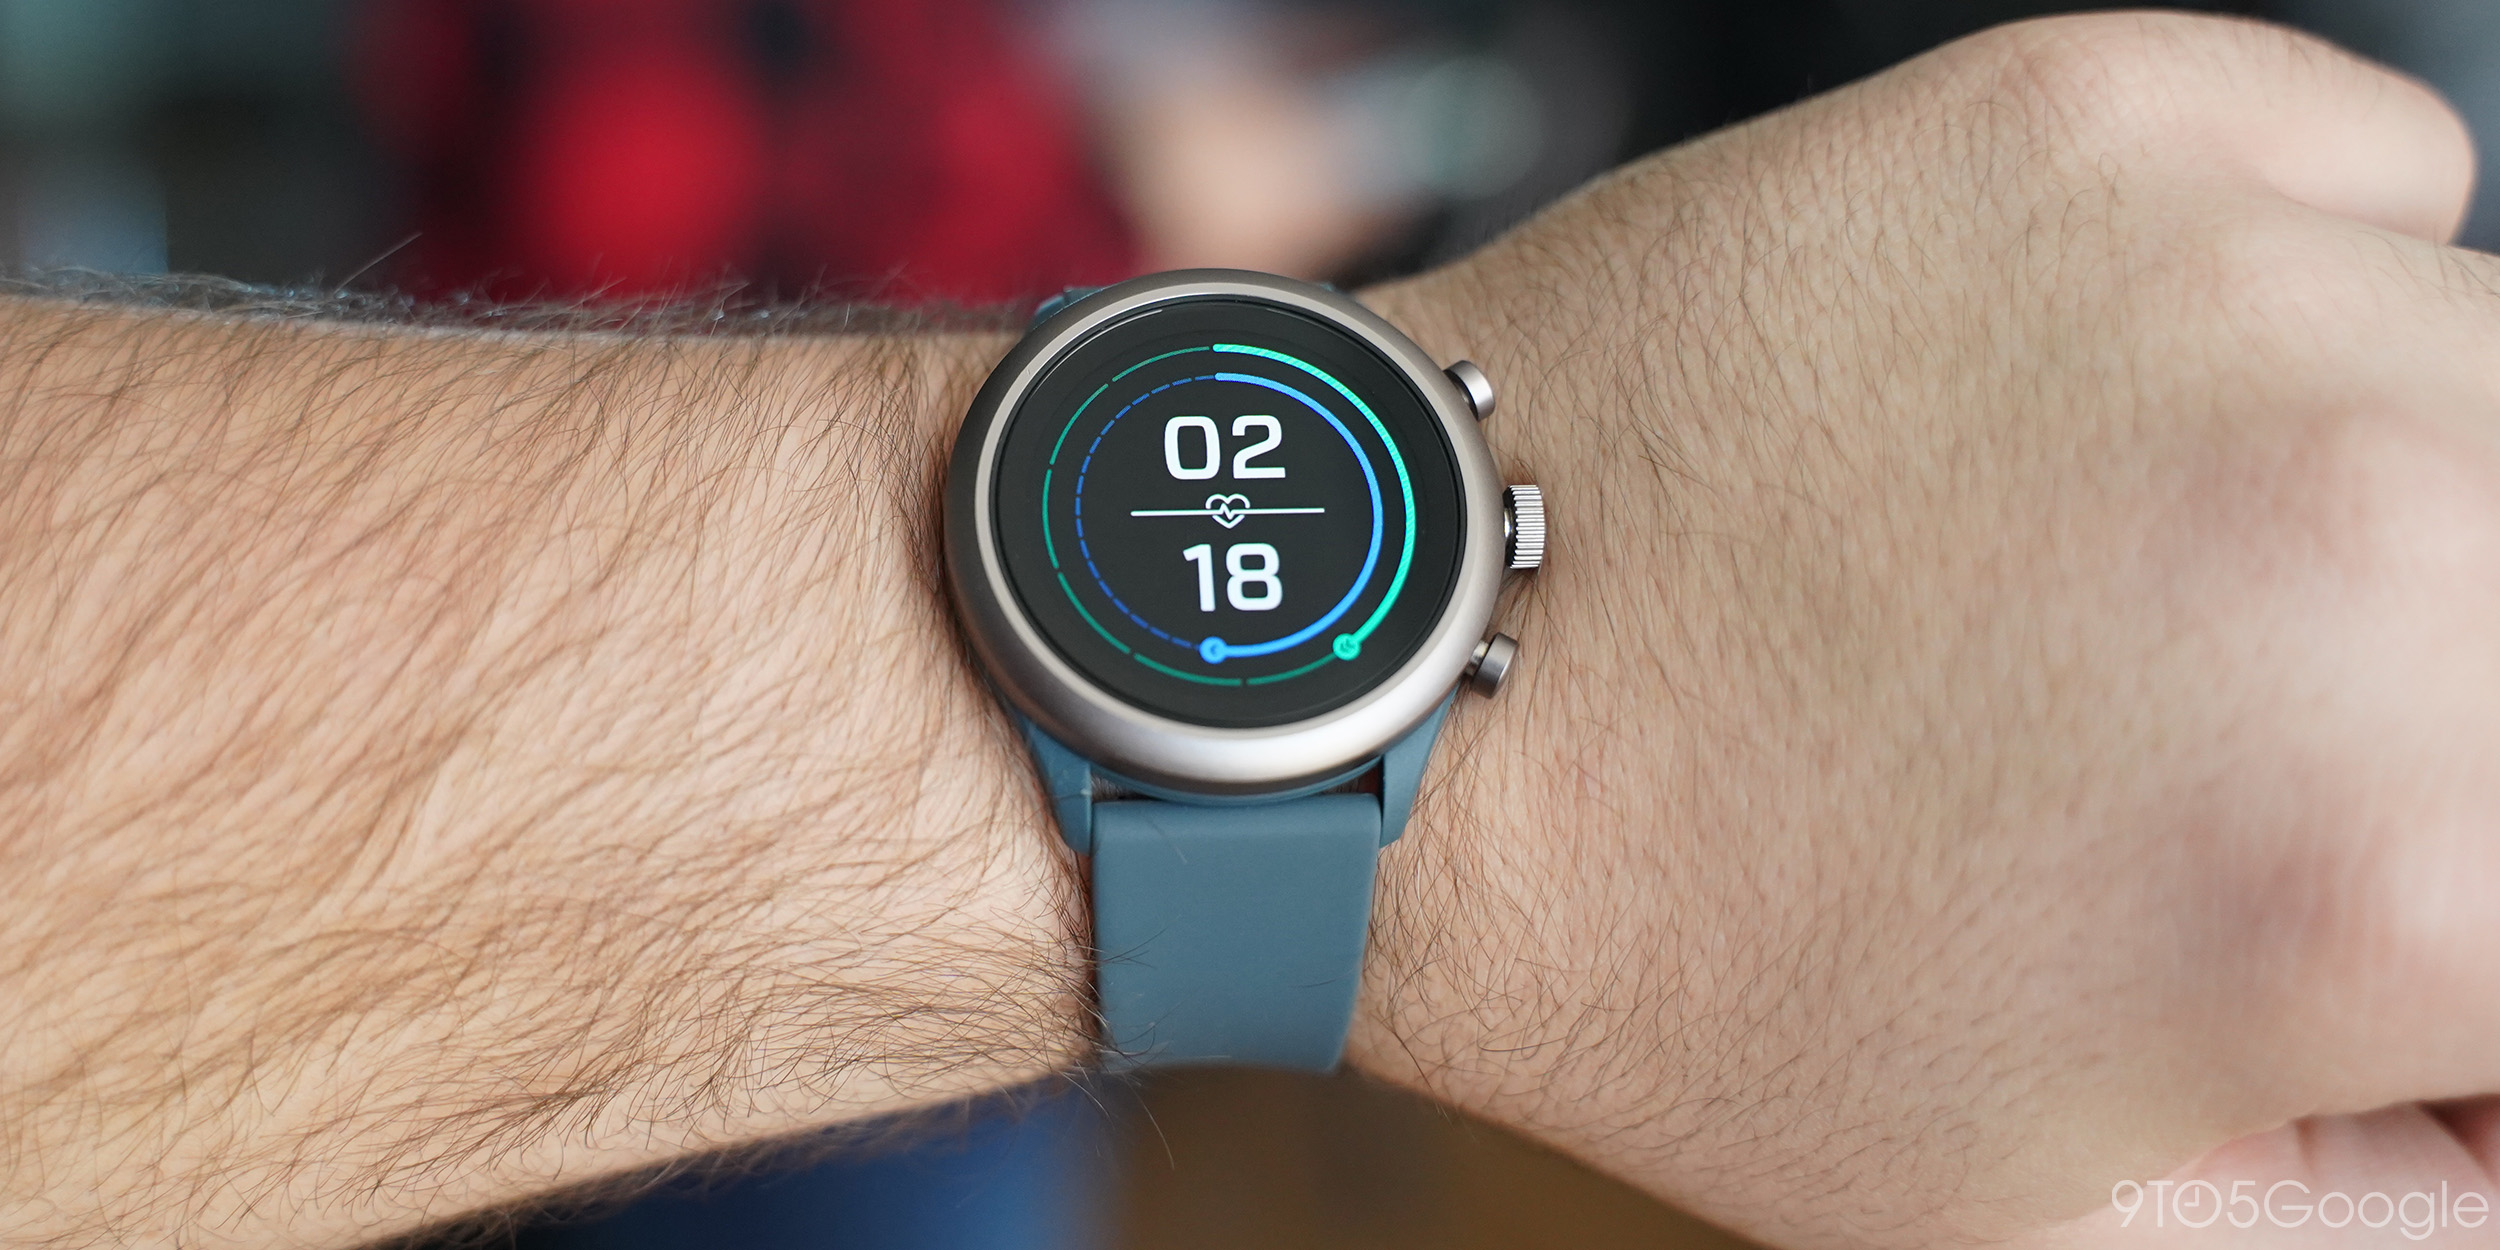 fossil sport smartwatch screen size